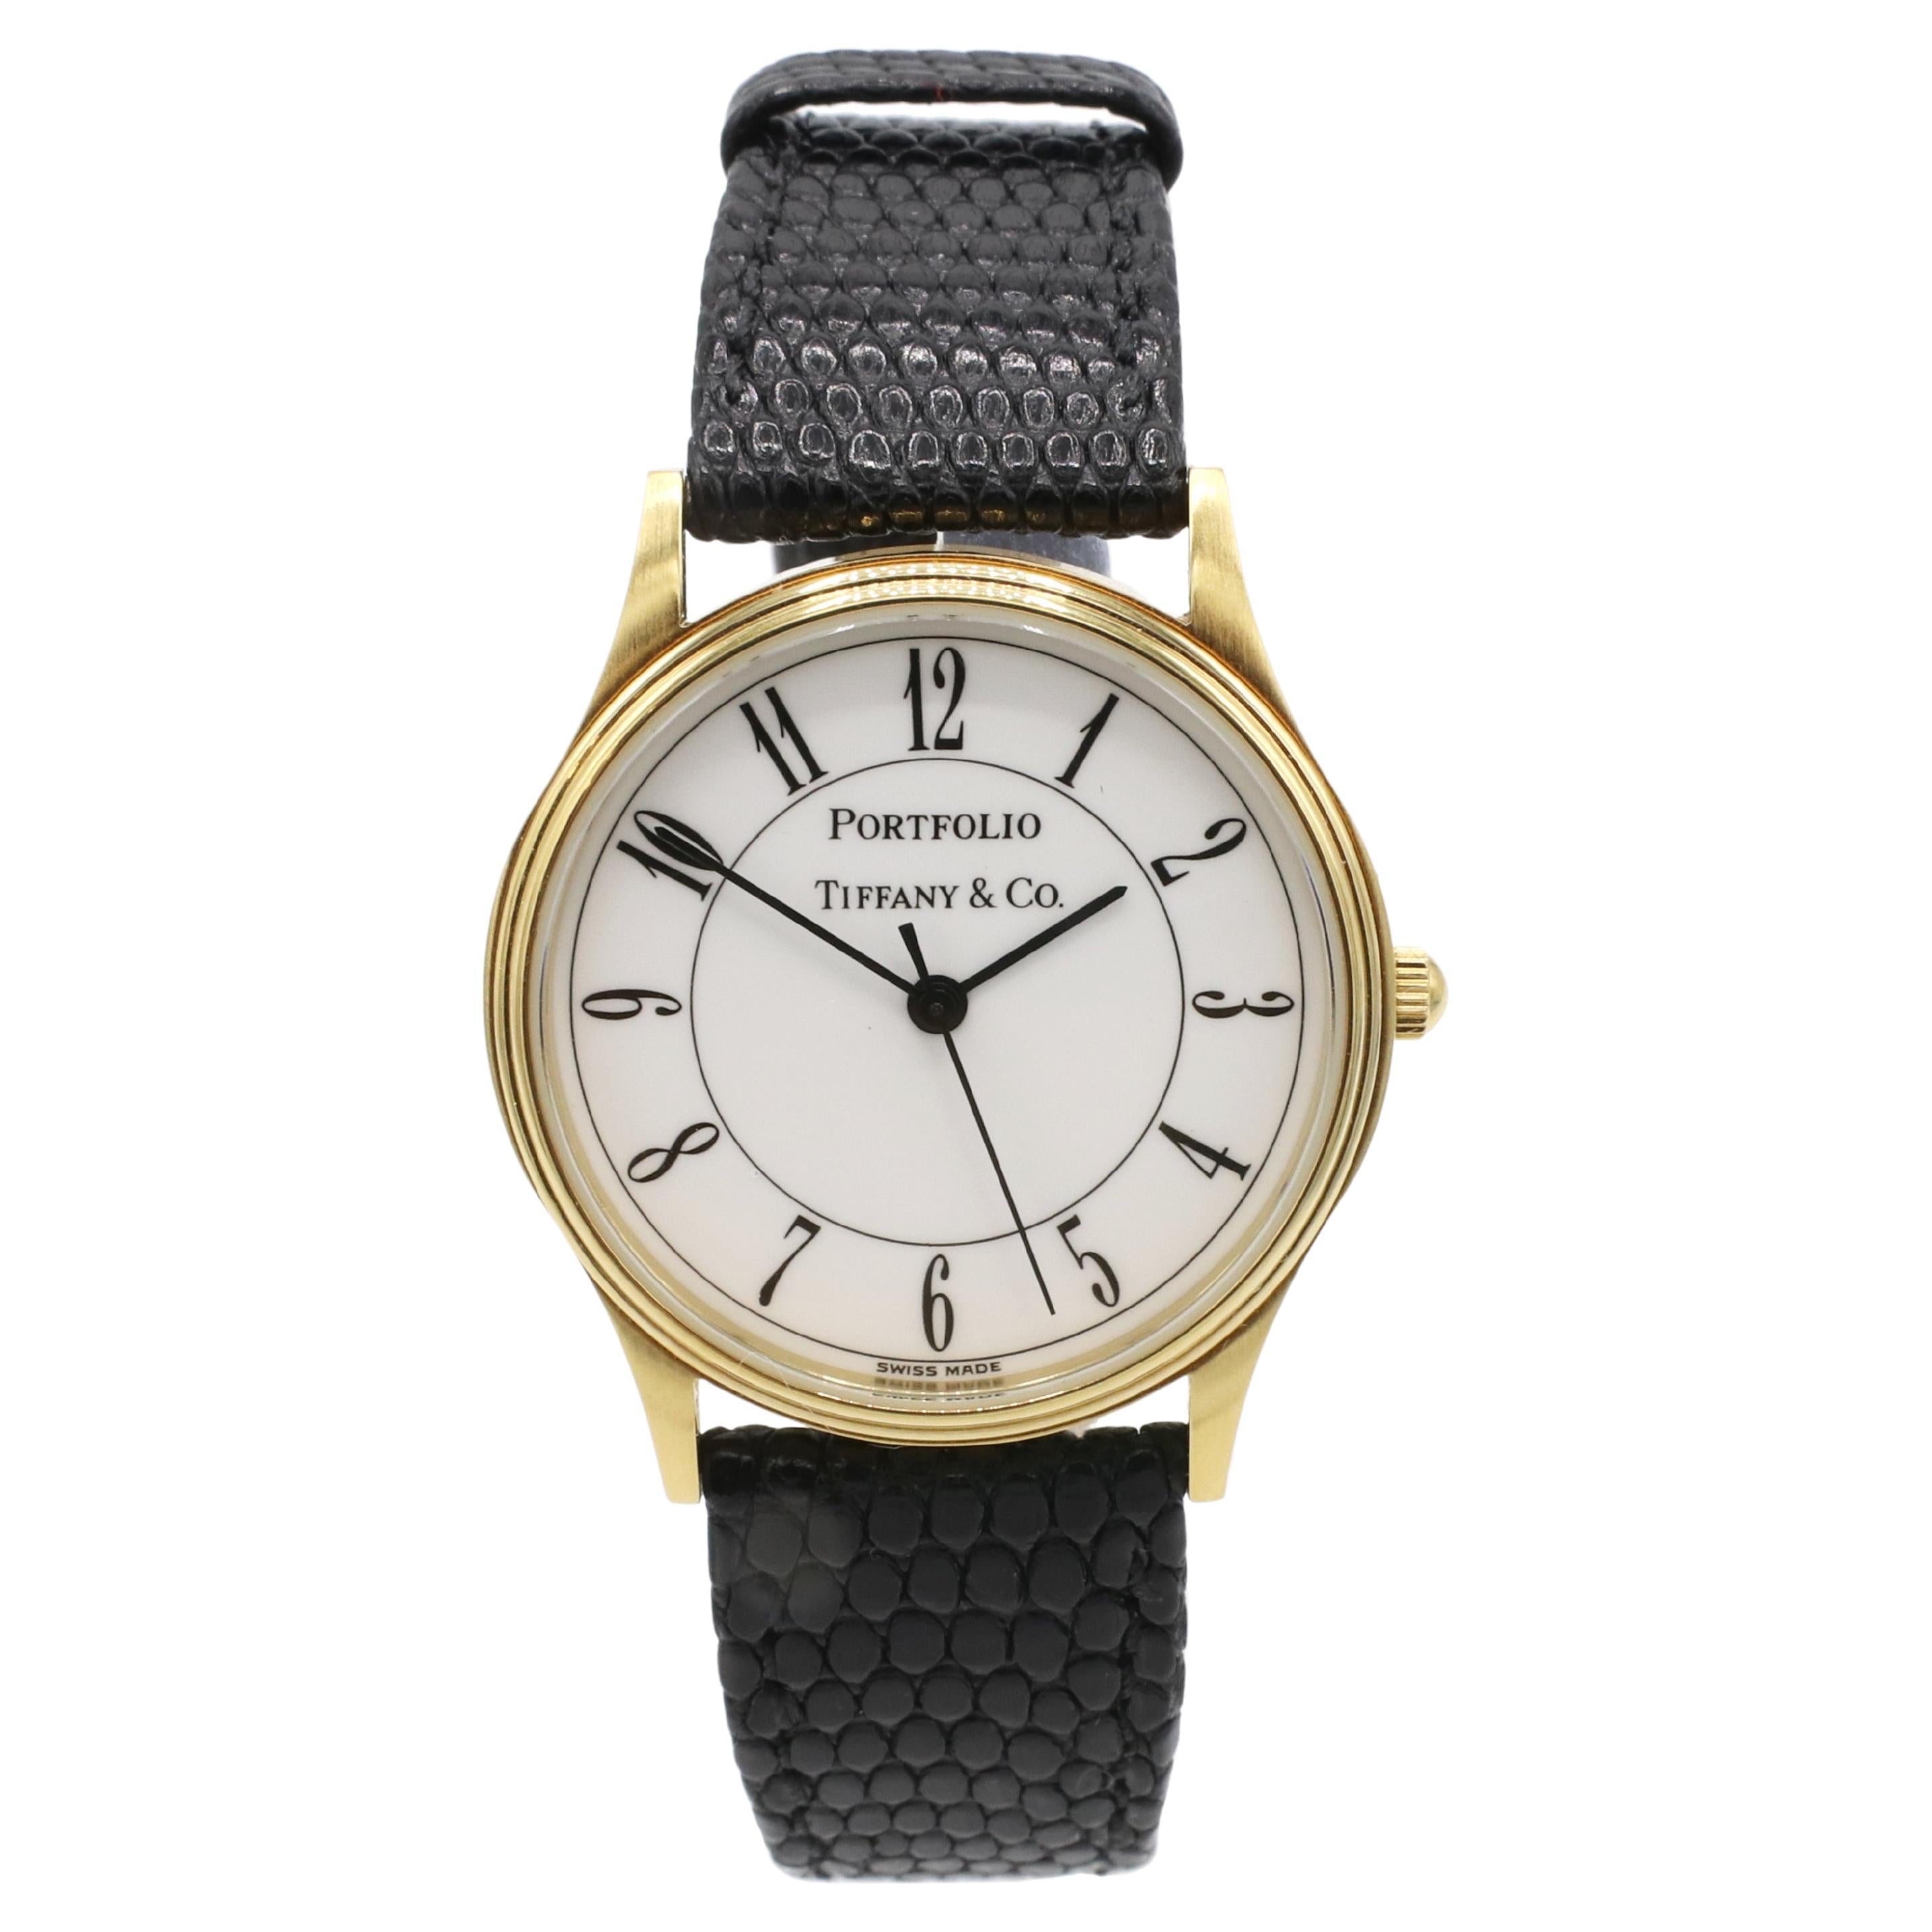 Tiffany and Co. Portfolio White Dial Black Leather Strap Quartz Watch